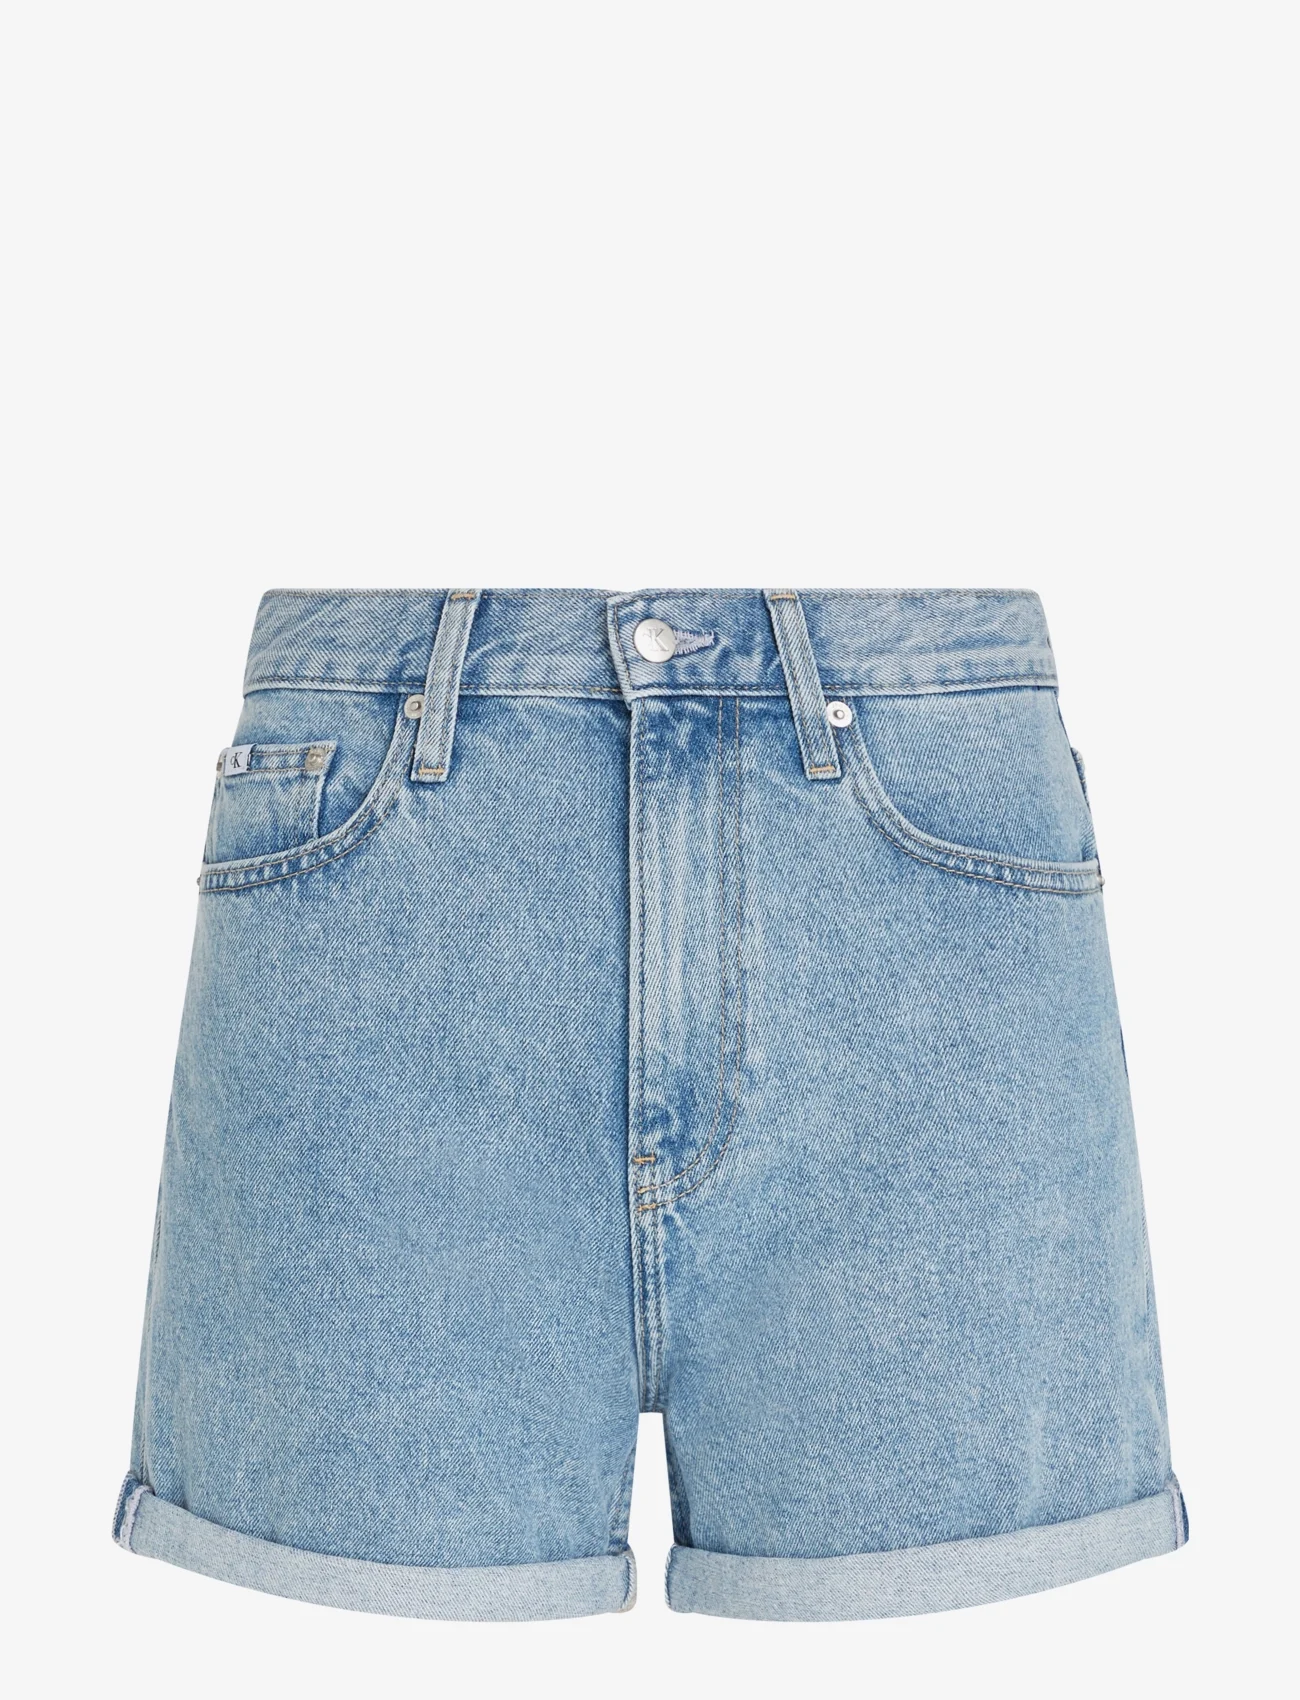 Calvin Klein Jeans - MOM SHORT - jeansshorts - denim medium - 0